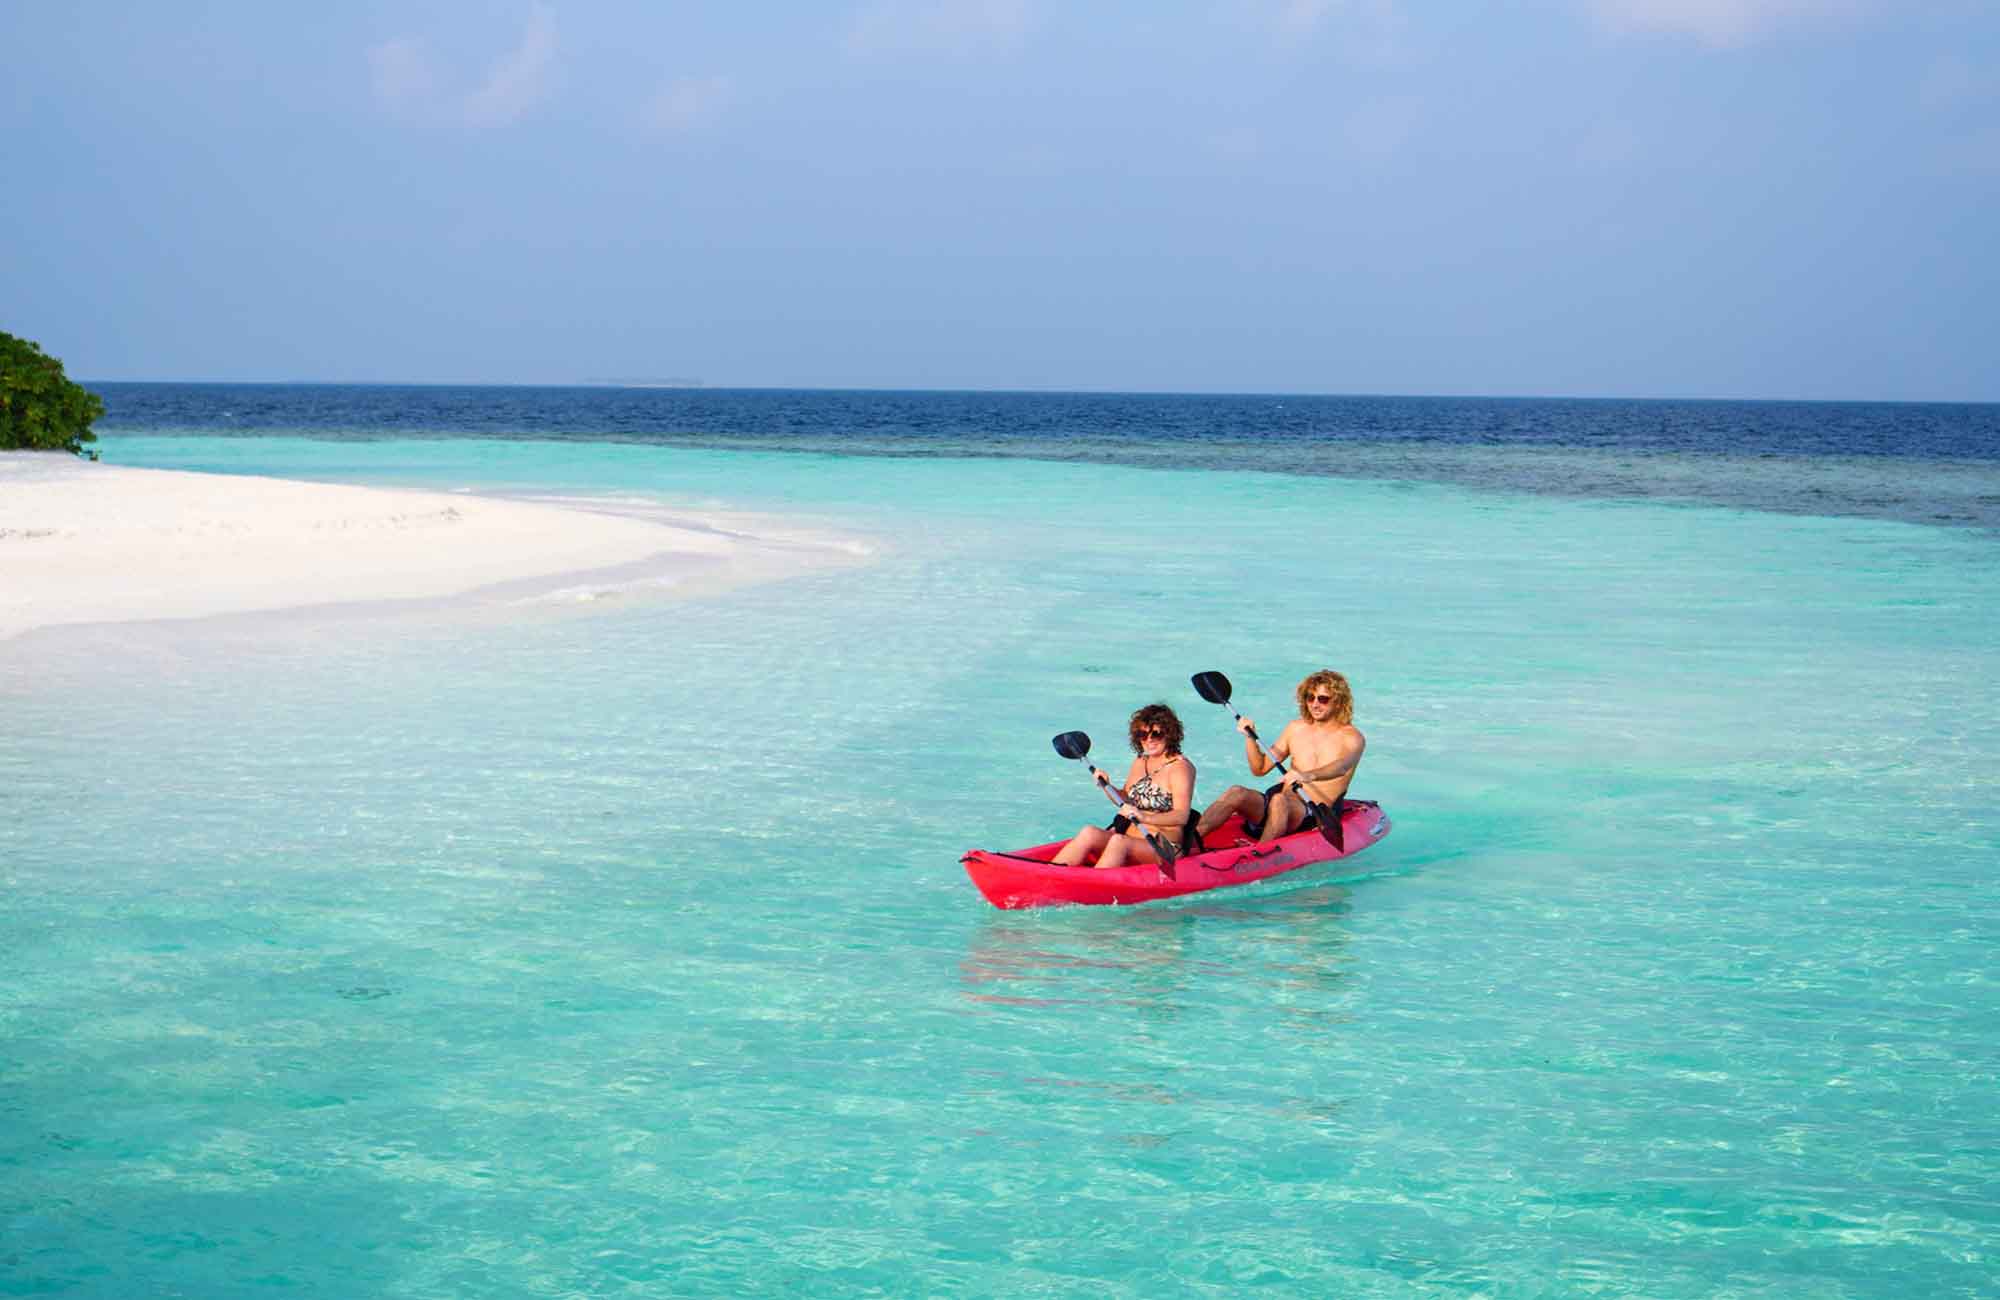 KANDOLHU IS PERFECT LOCATION FOR MALDIVES HOLIDAY